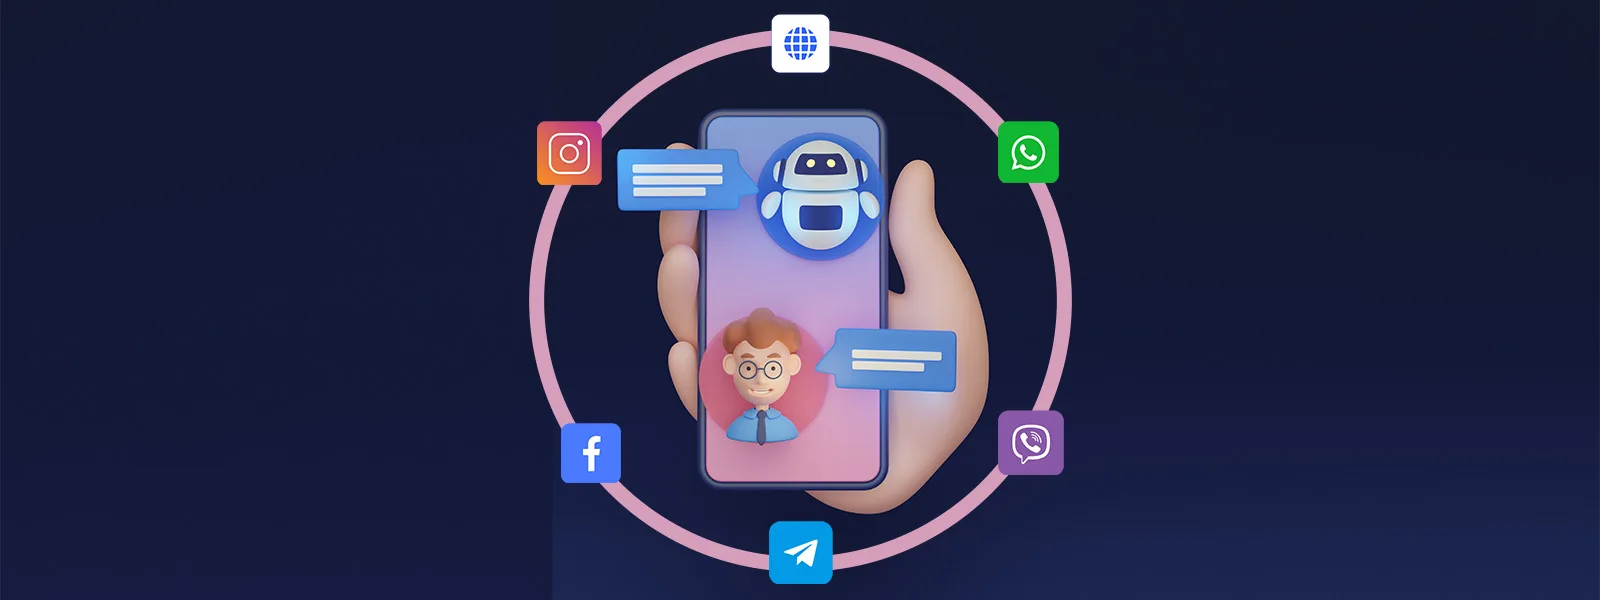 social media chatbot for business